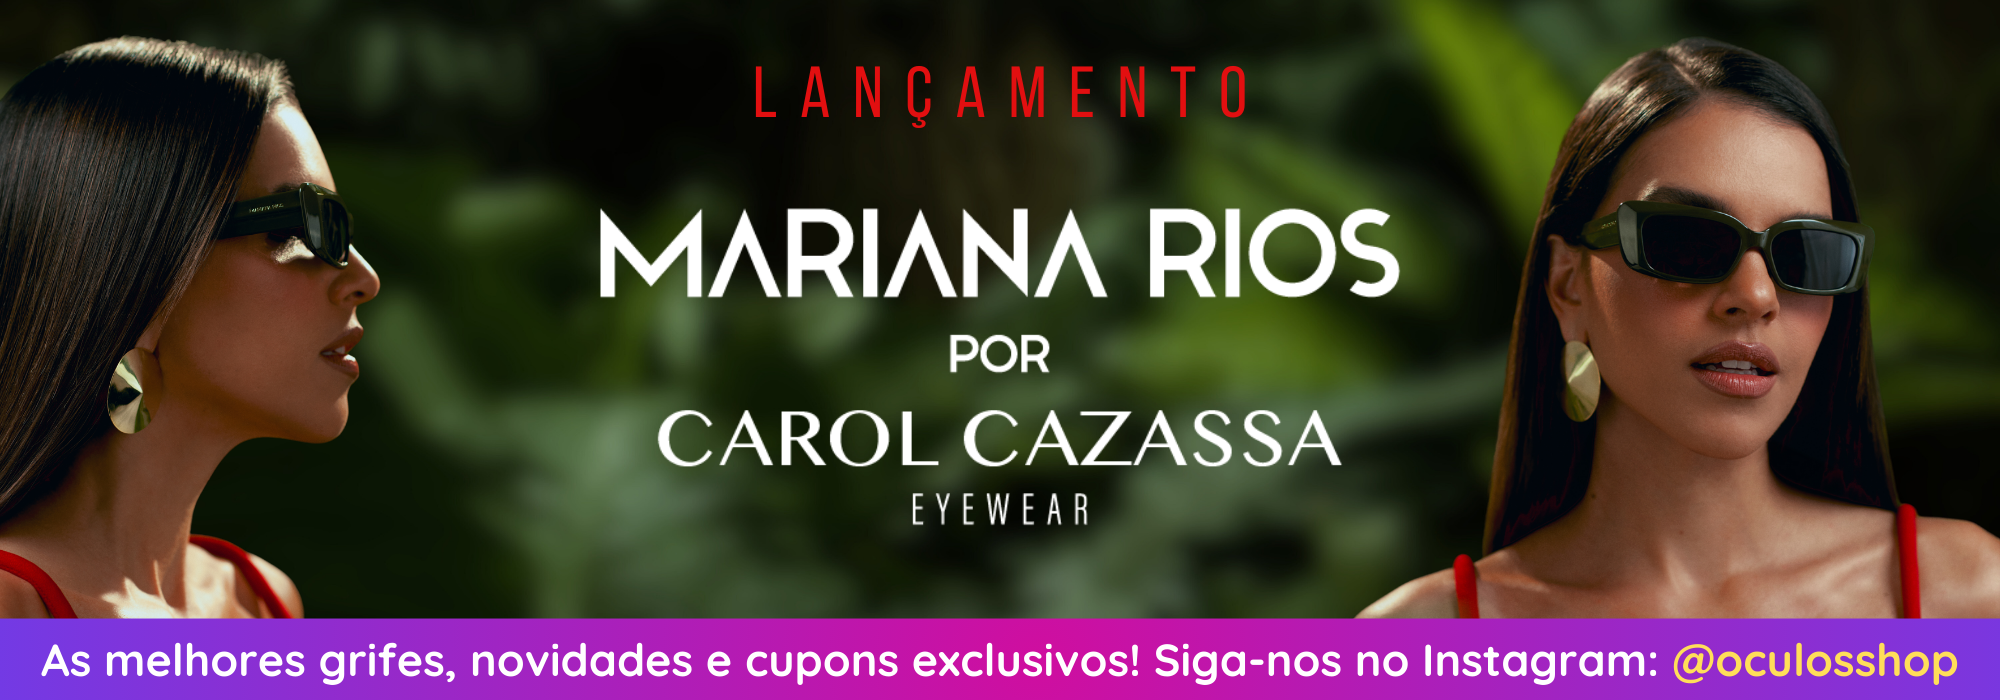 Mariana Rios para Carol Cazassa